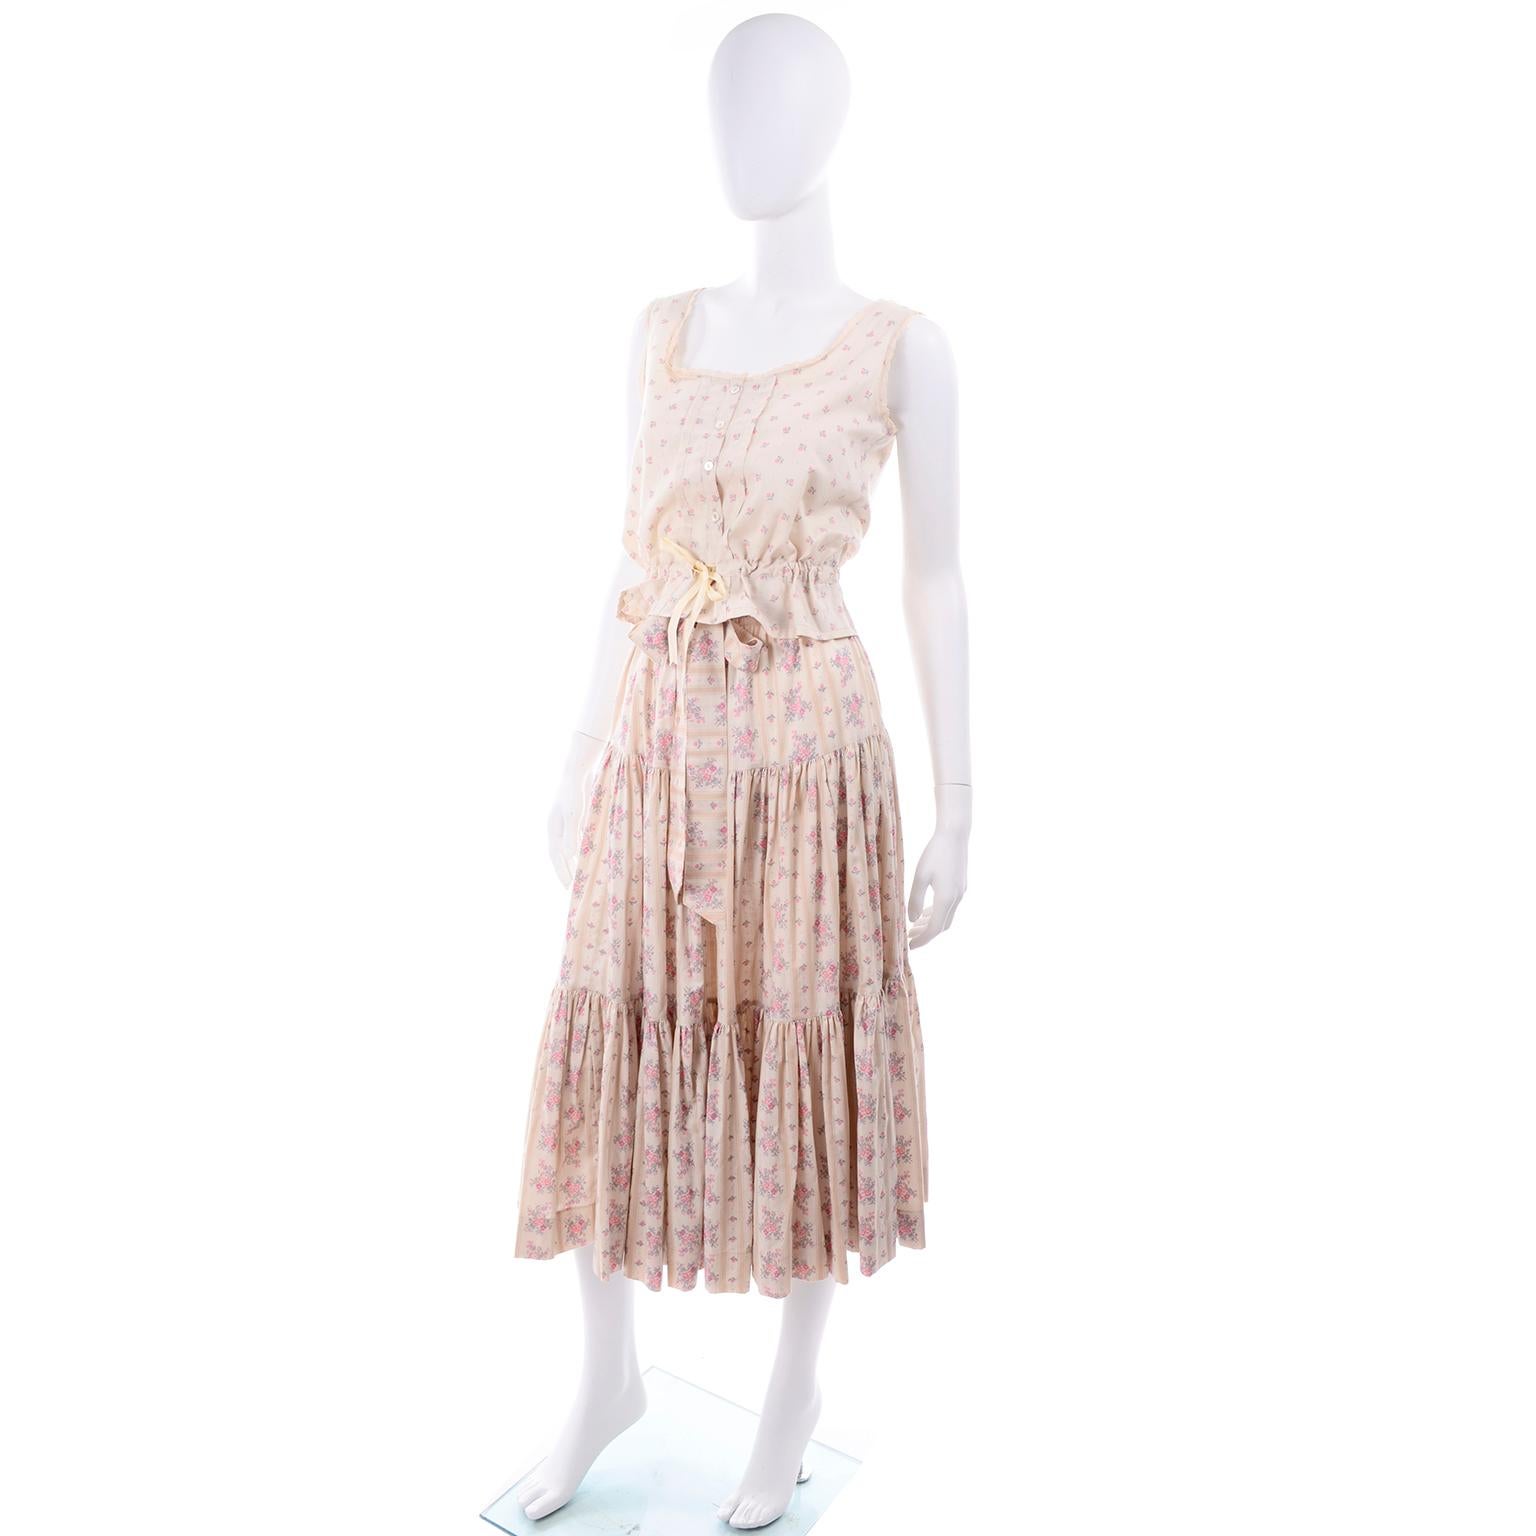 Beige Laura Ashley Edwardian Inspired Vintage Great Britain Floral Top & Ruffled Skirt